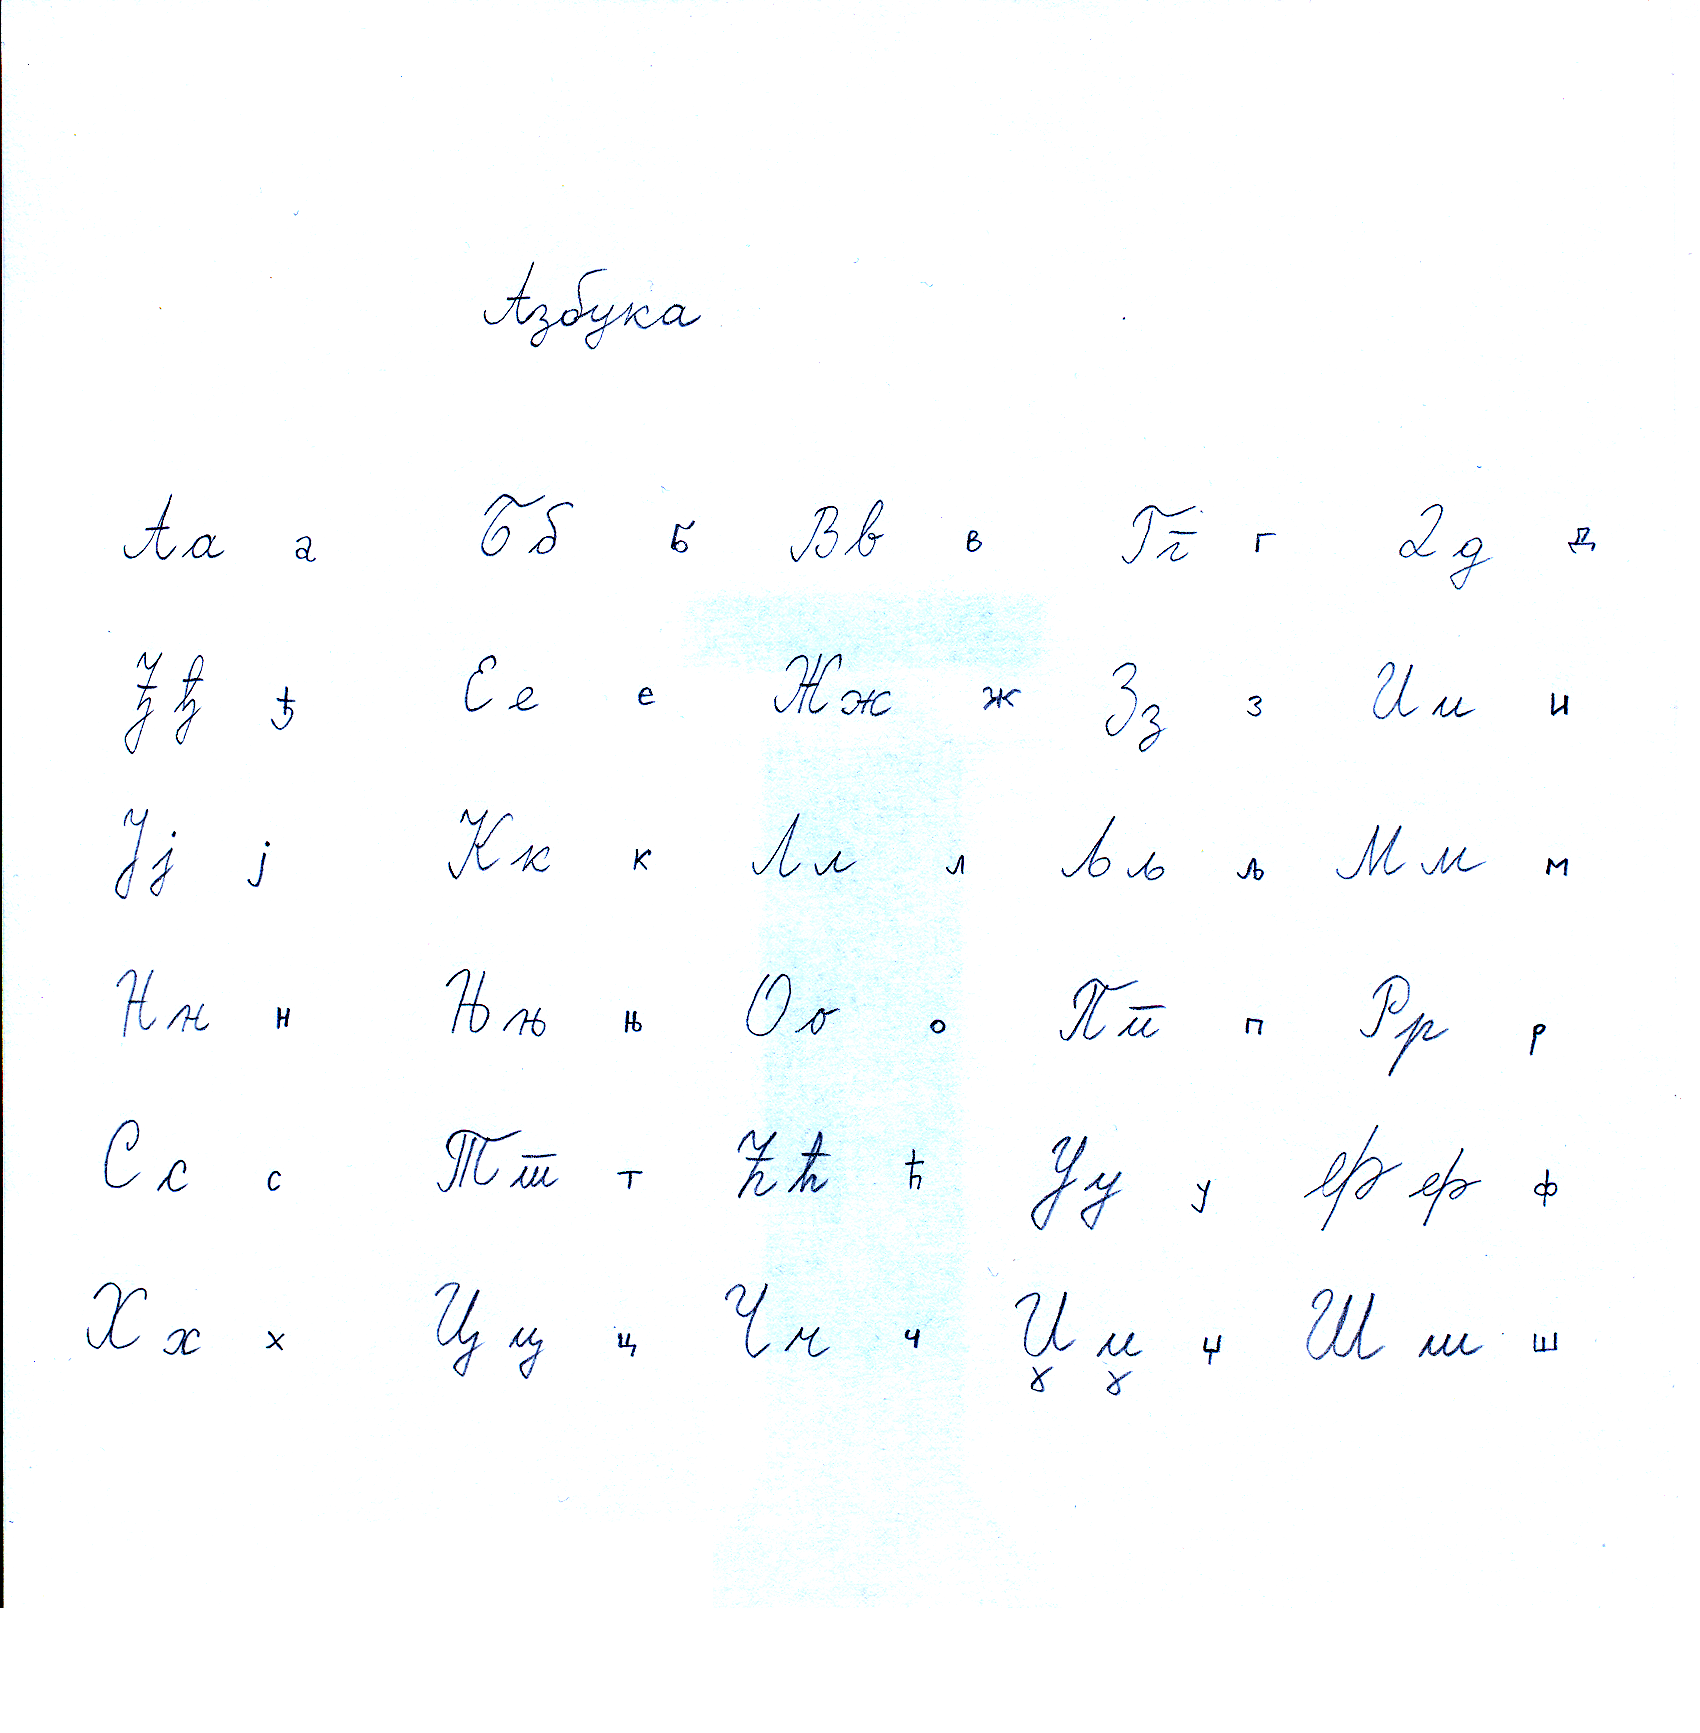 serbian cyrillic alphabet